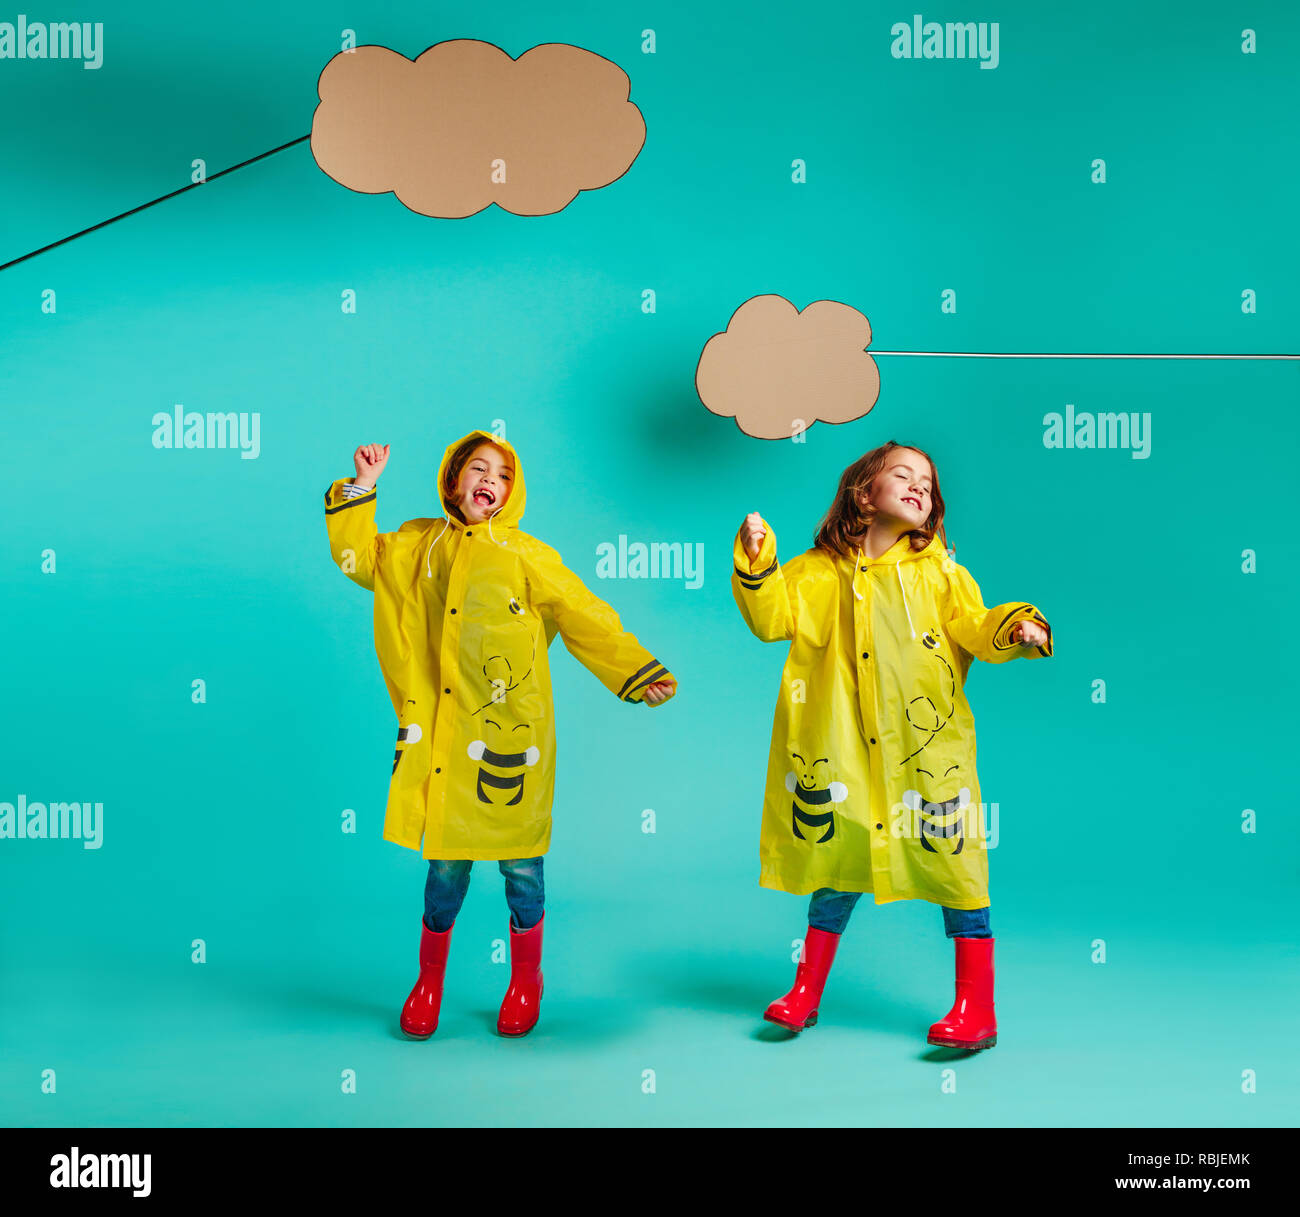 Cute twins girls dancing in raincoats under paper clouds. Girls in rainwear dancing on blue background. Stock Photo